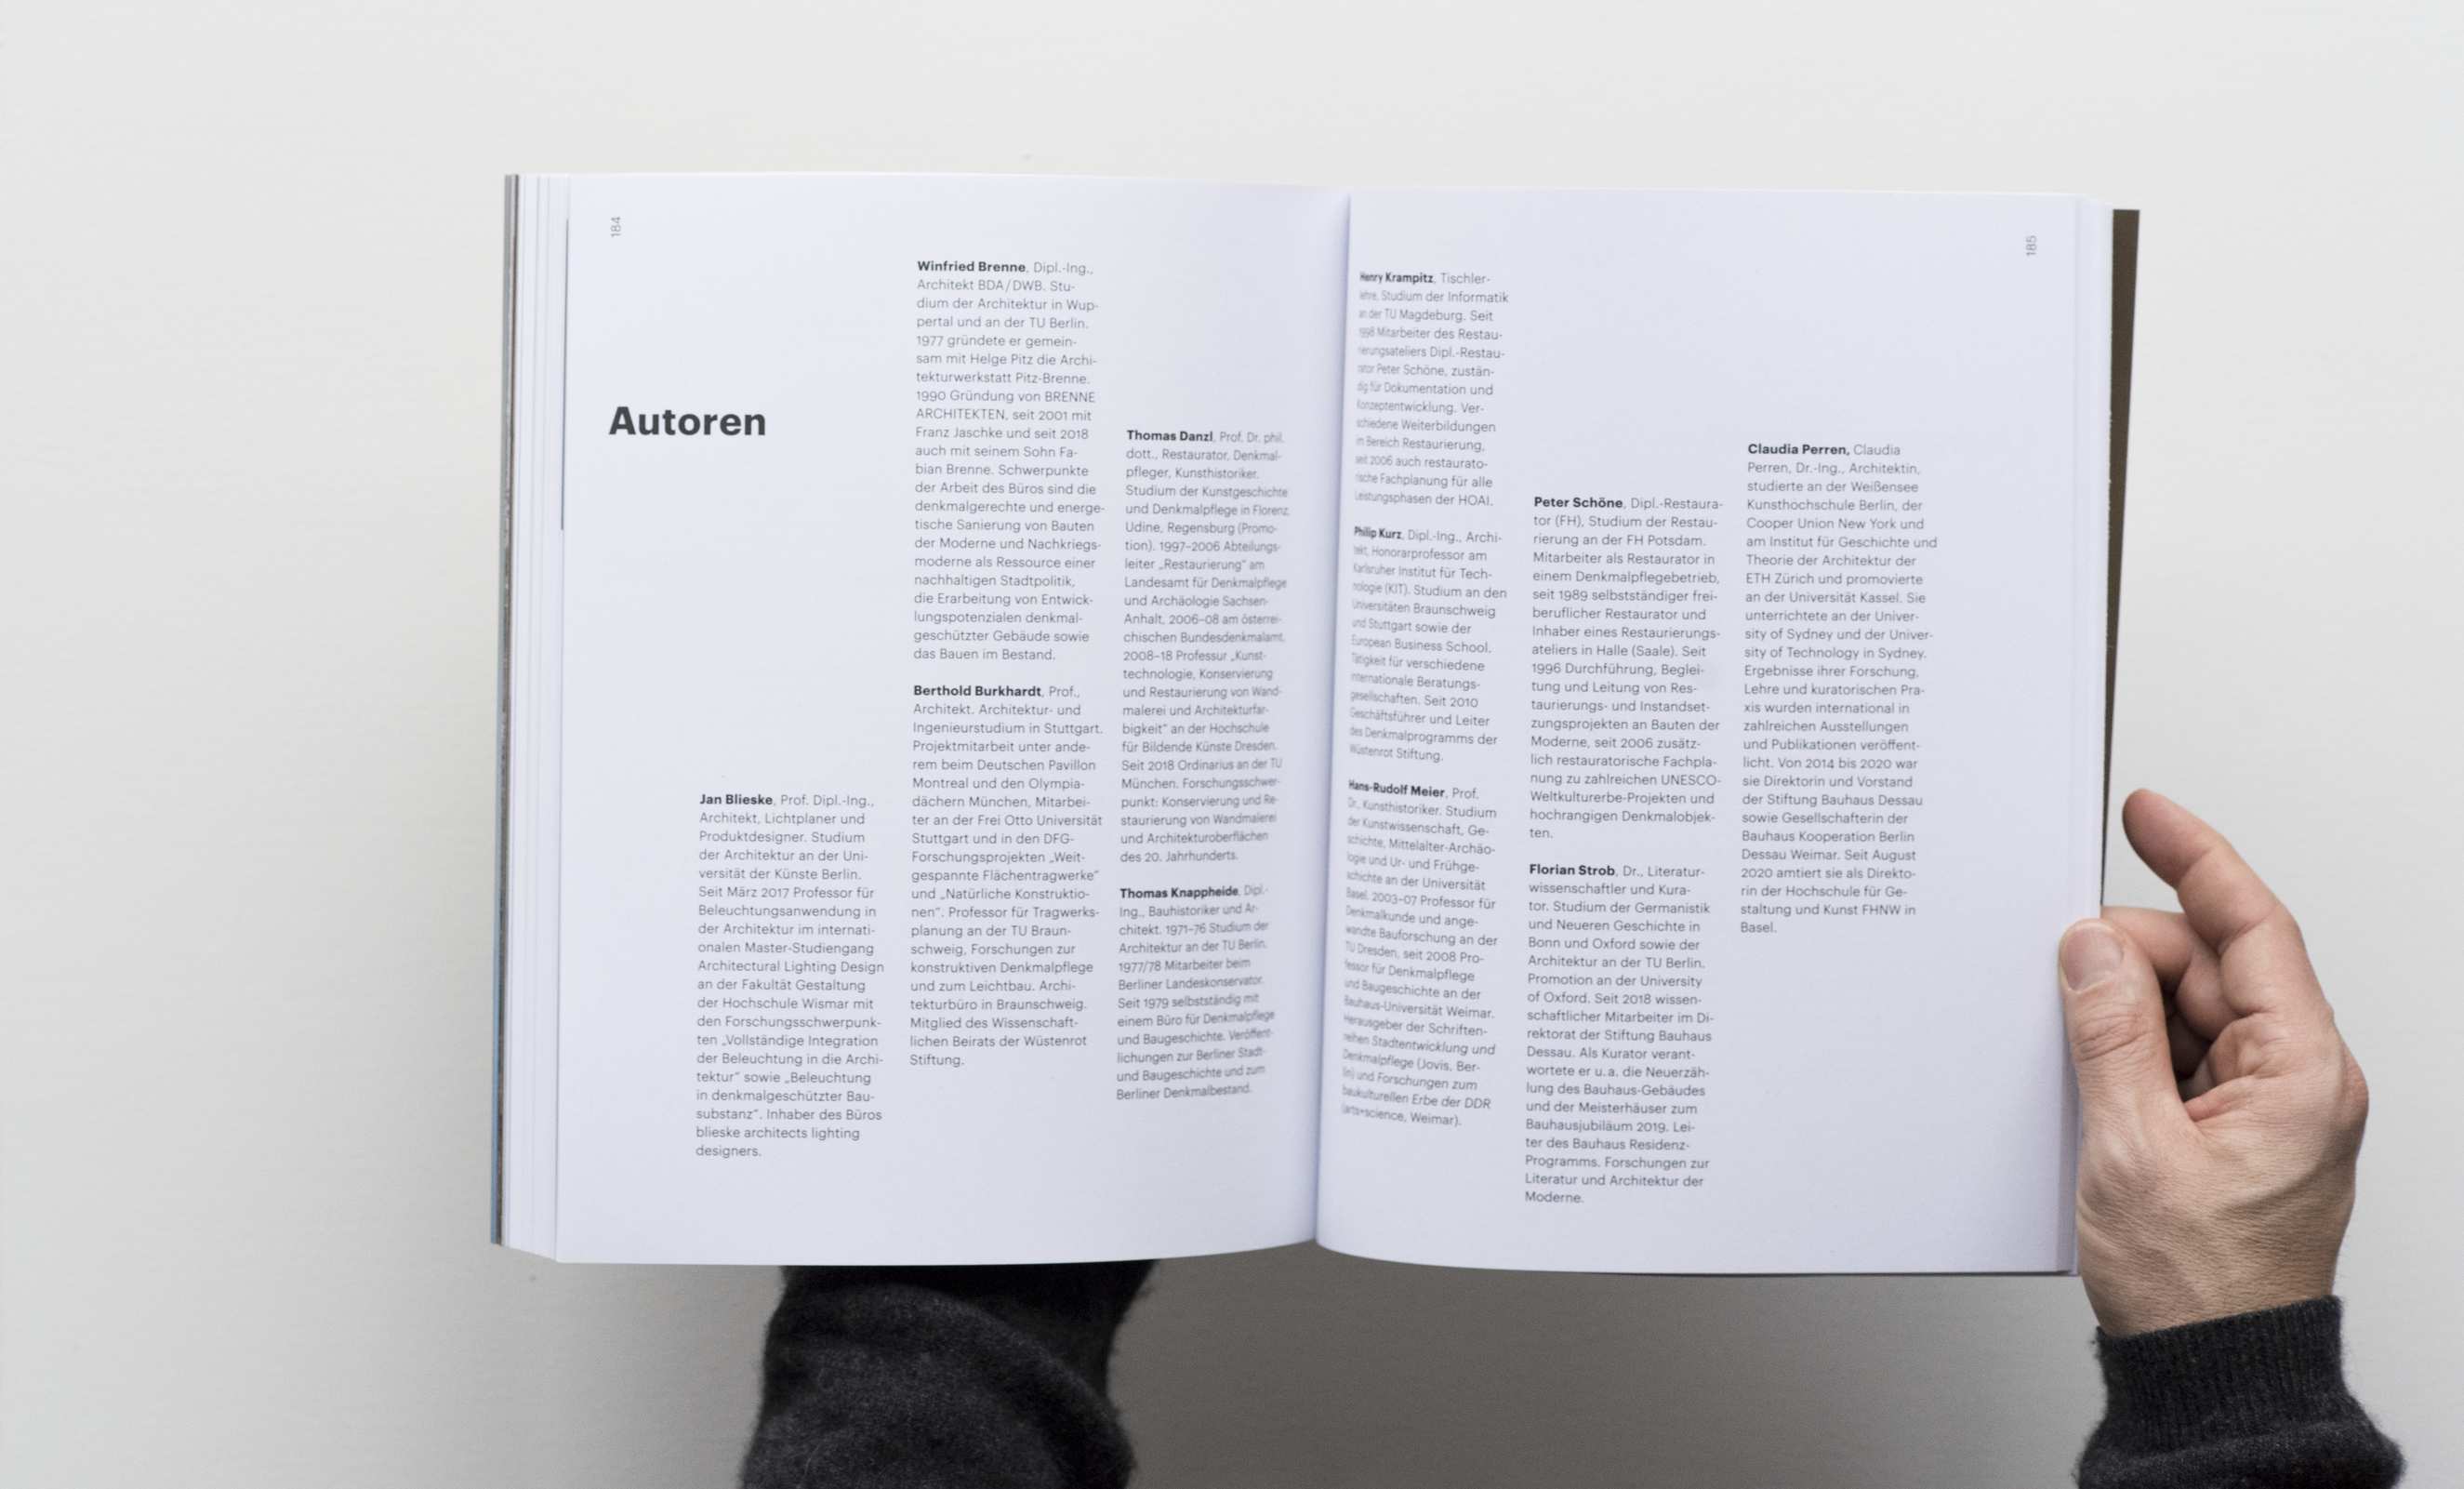 meisterhaus-kandinsky-klee-book-18-2650x1600px